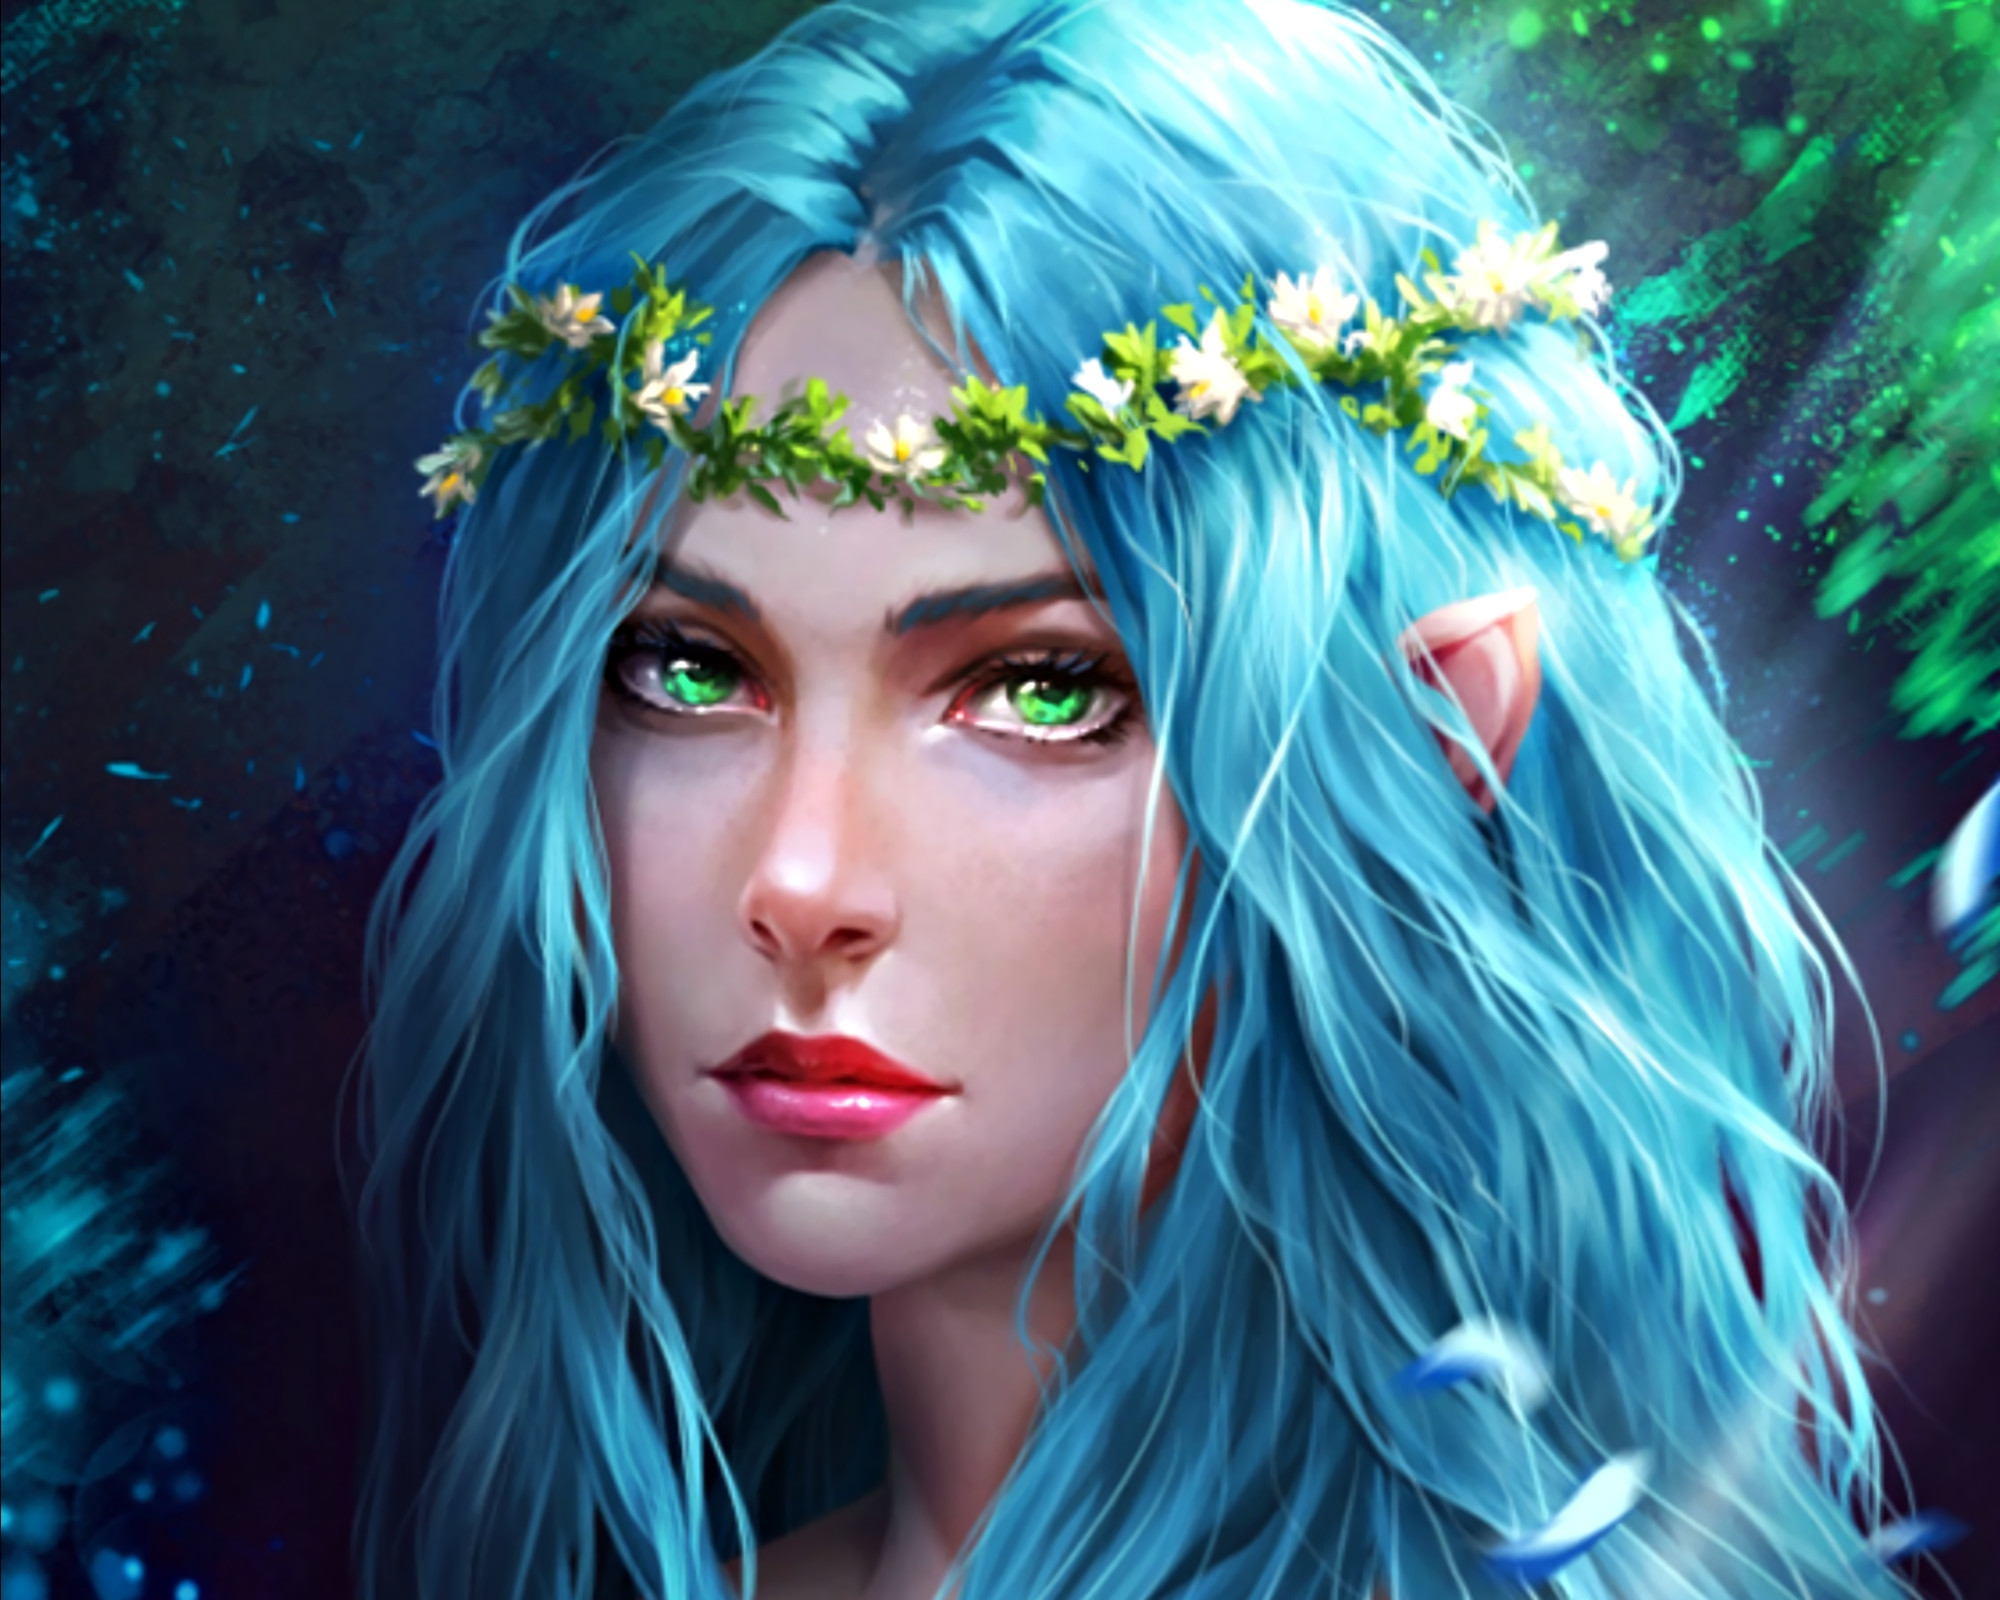 4. "Blue Haired Elf Costume" by Nerdvana - wide 9